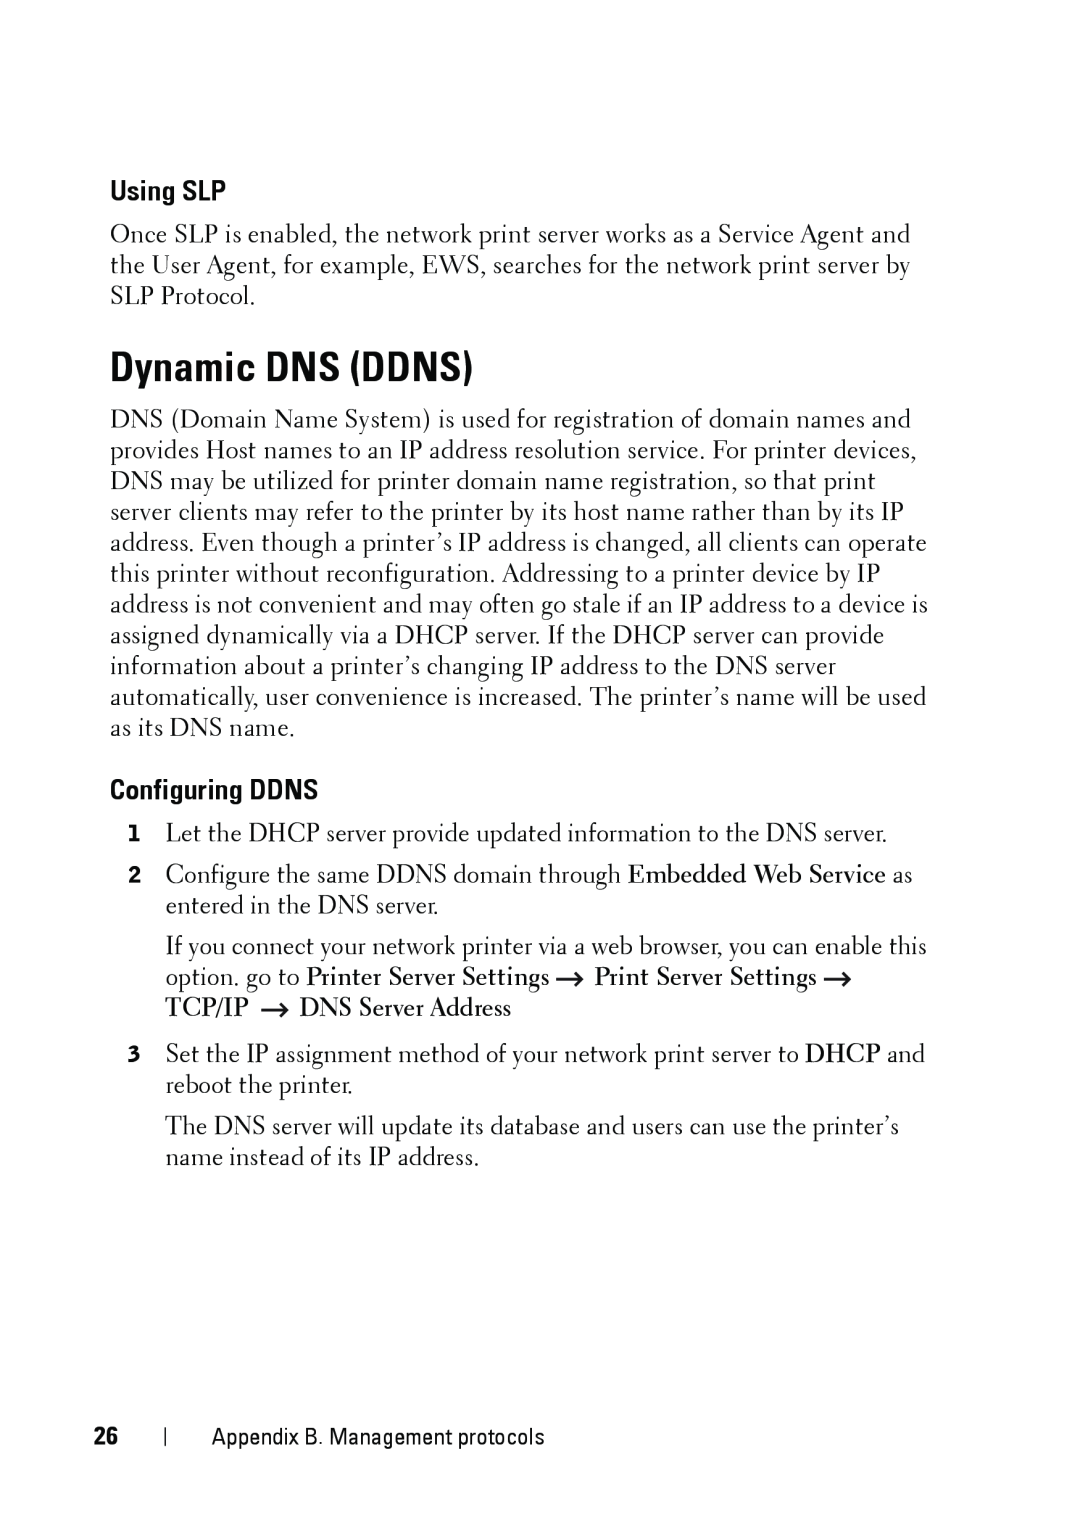 Dell 5002 manual Dynamic DNS DDNS, Using SLP, Configuring DDNS, TCP/IP DNS Server Address 